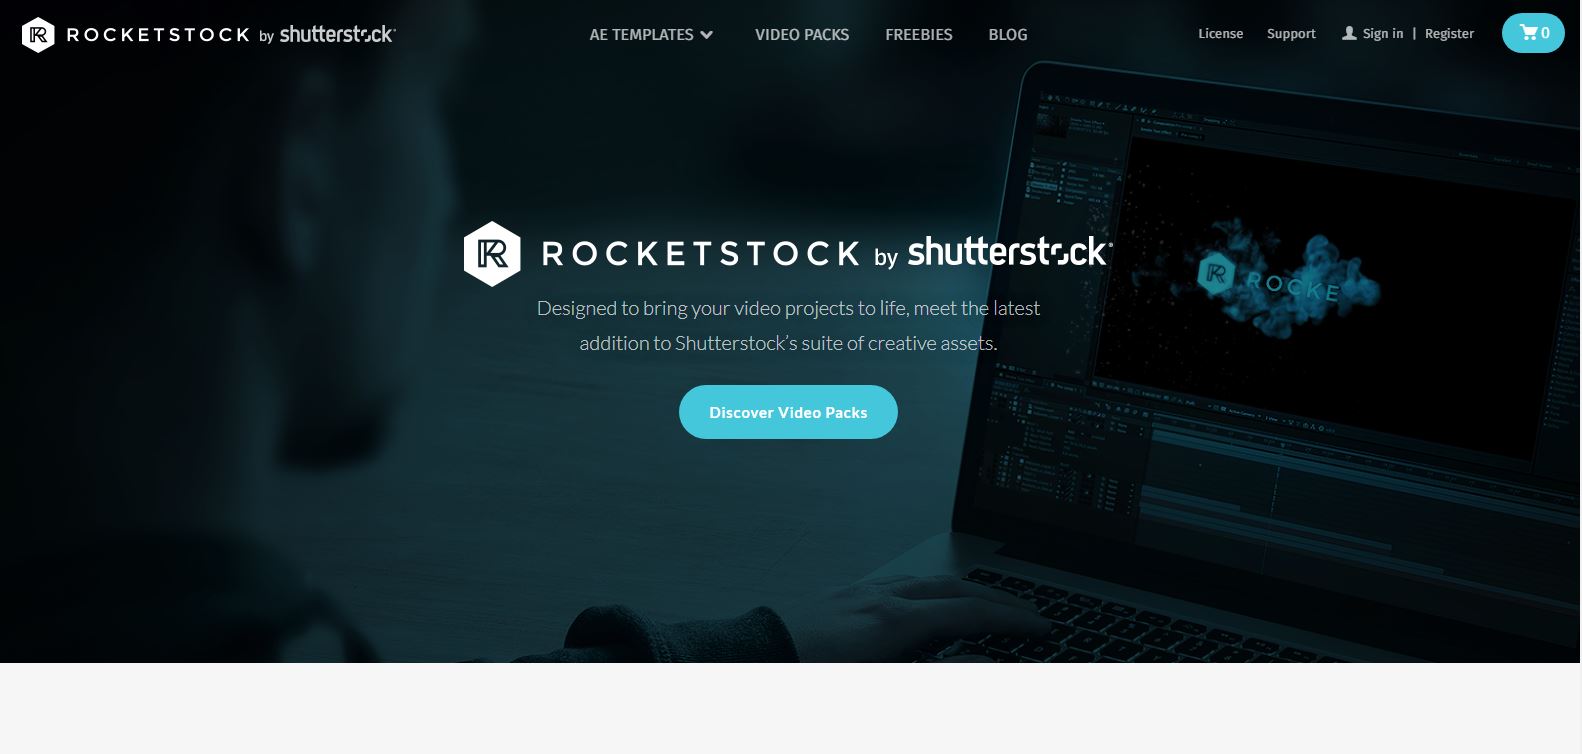 Rocketstock by shutterstock free template after effects